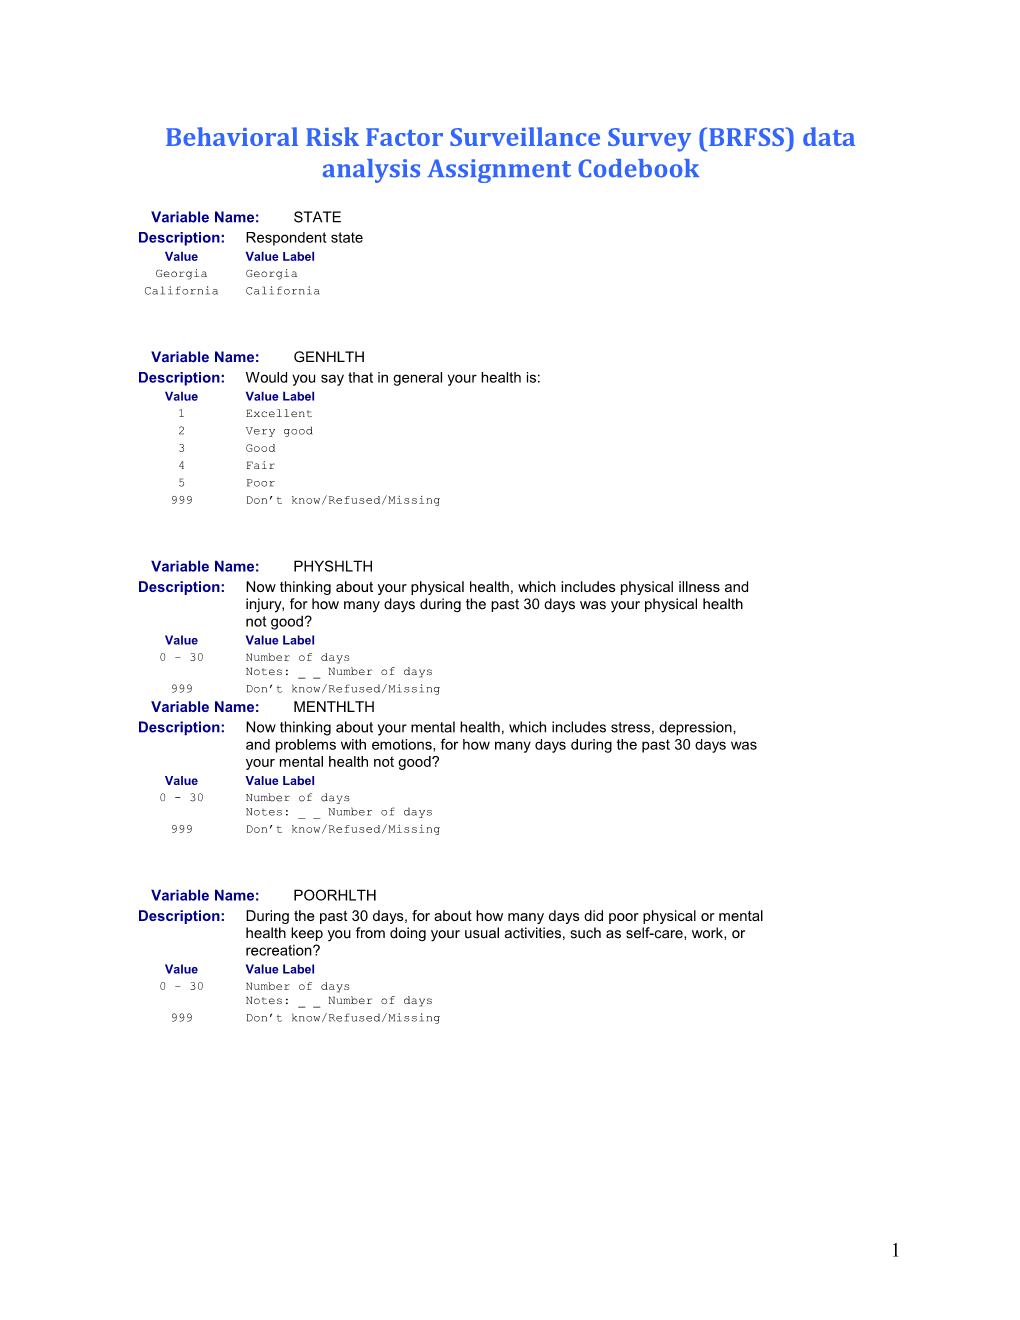 Metropolitan Statistical Area (MSA) Assignment Codebook